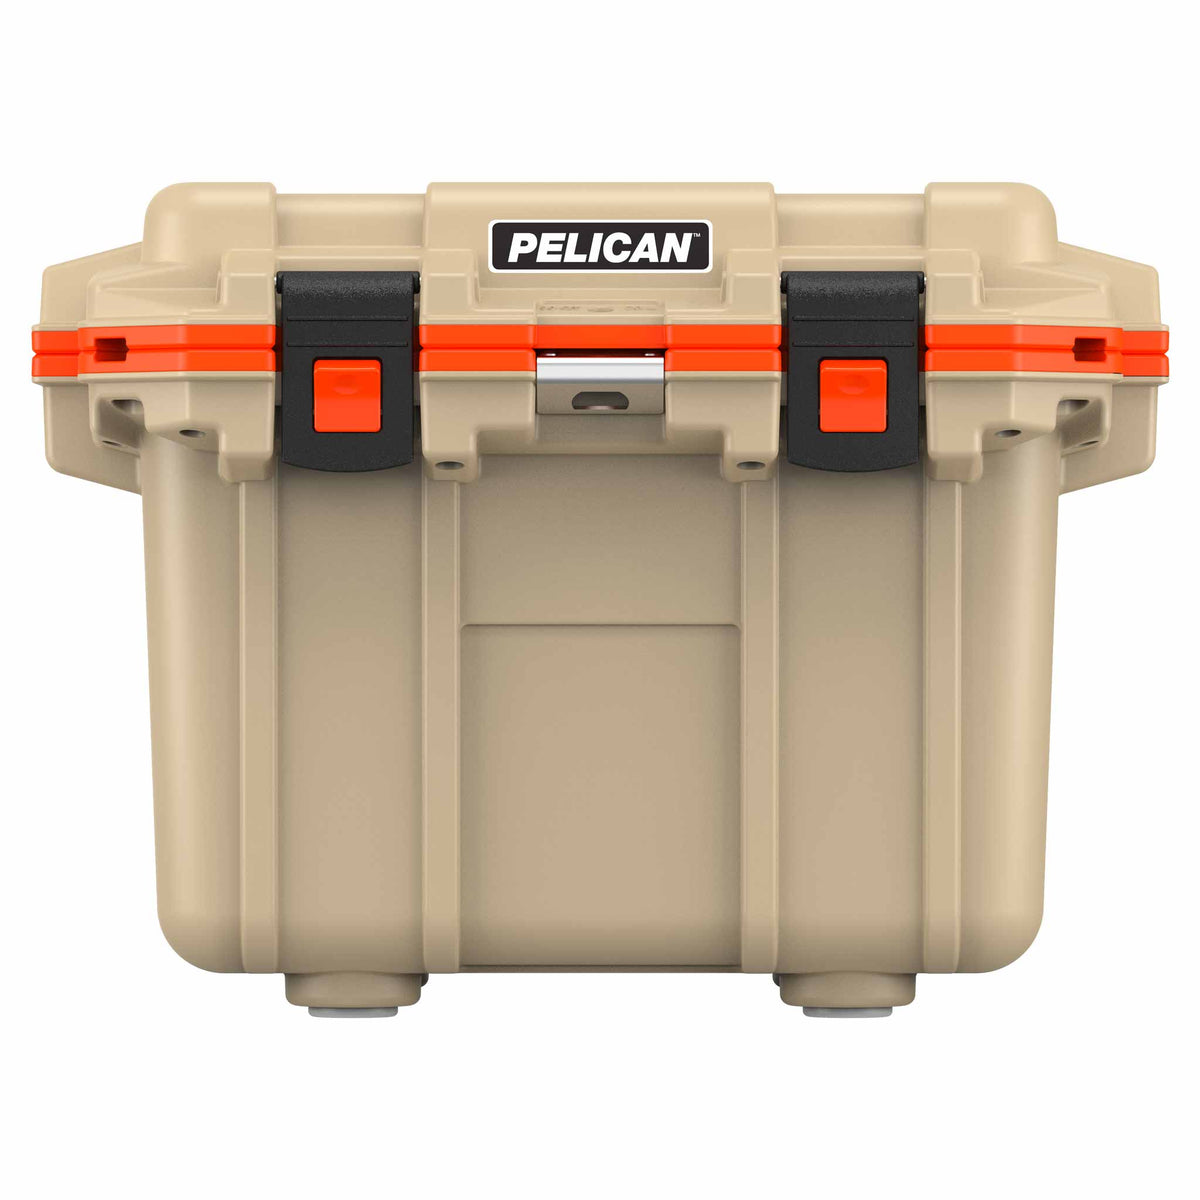 Refurbished 30QT Pelican Elite Cooler in Tan/Orange